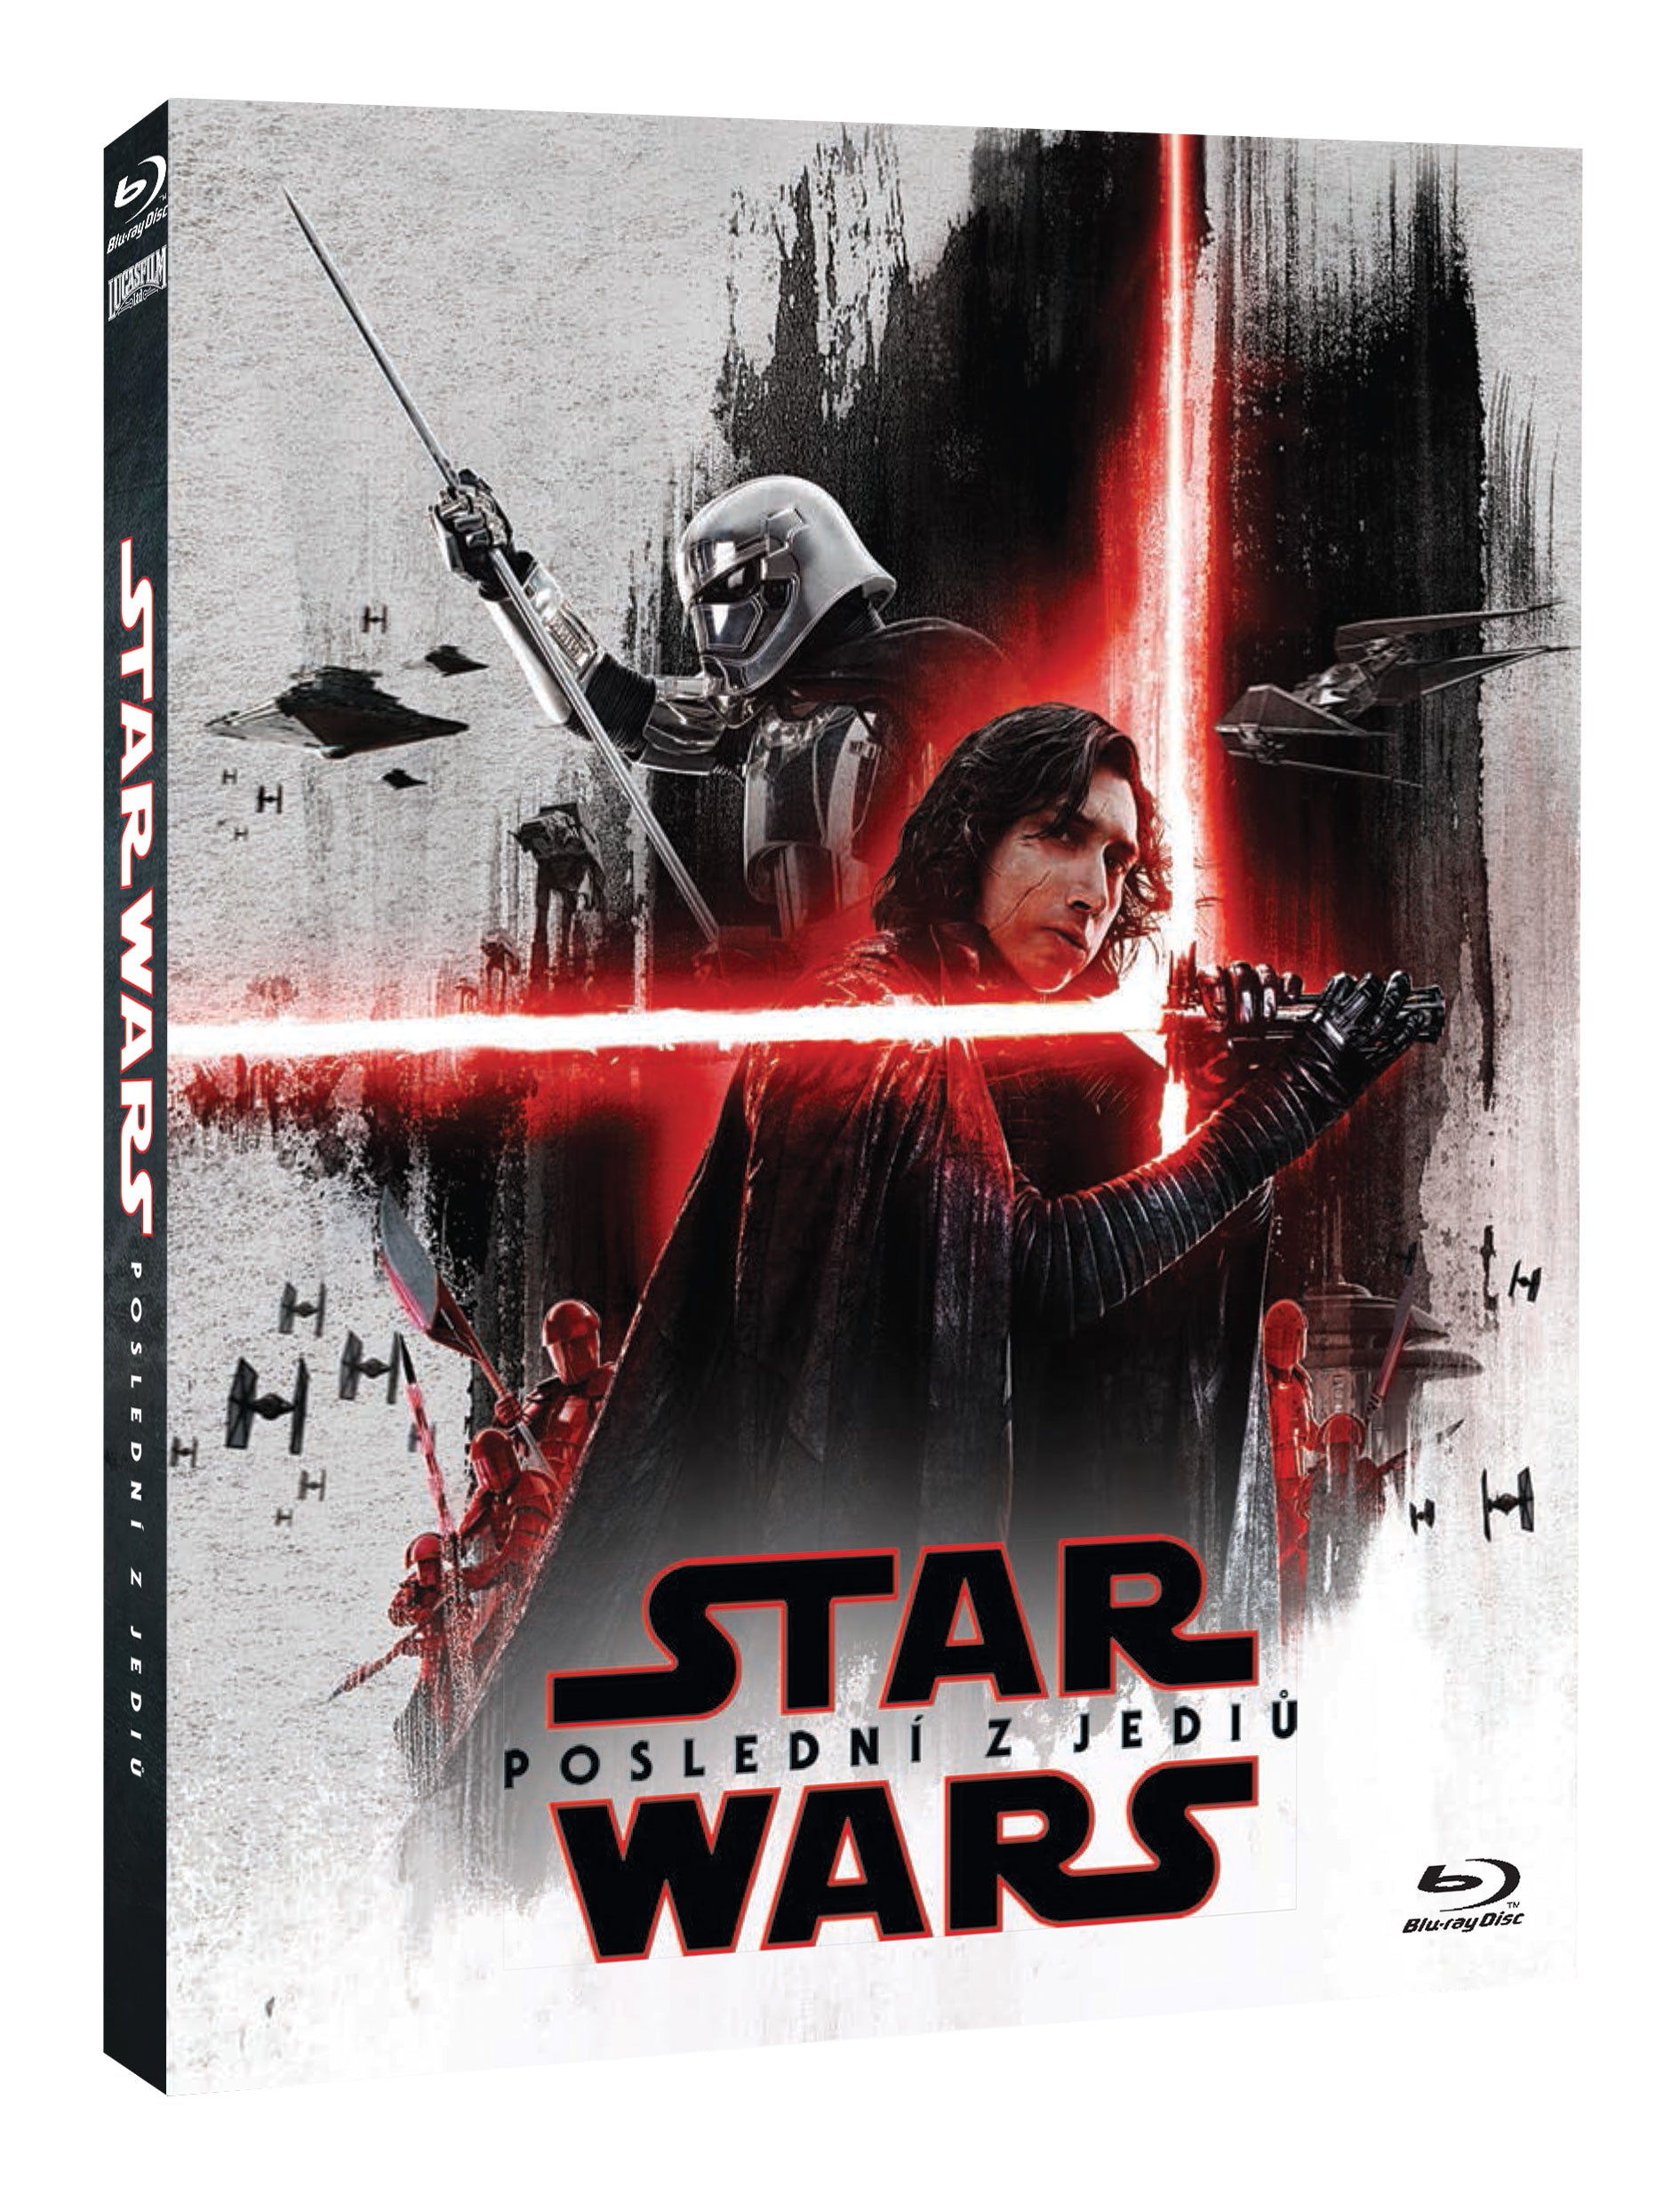 Star Wars: Posledni z Jediu 2BD (2D+bonus disk) - Limitovana edice Prvni rad BD / Star Wars: The Last Jedi - Limited Edition The First Order - Czech version